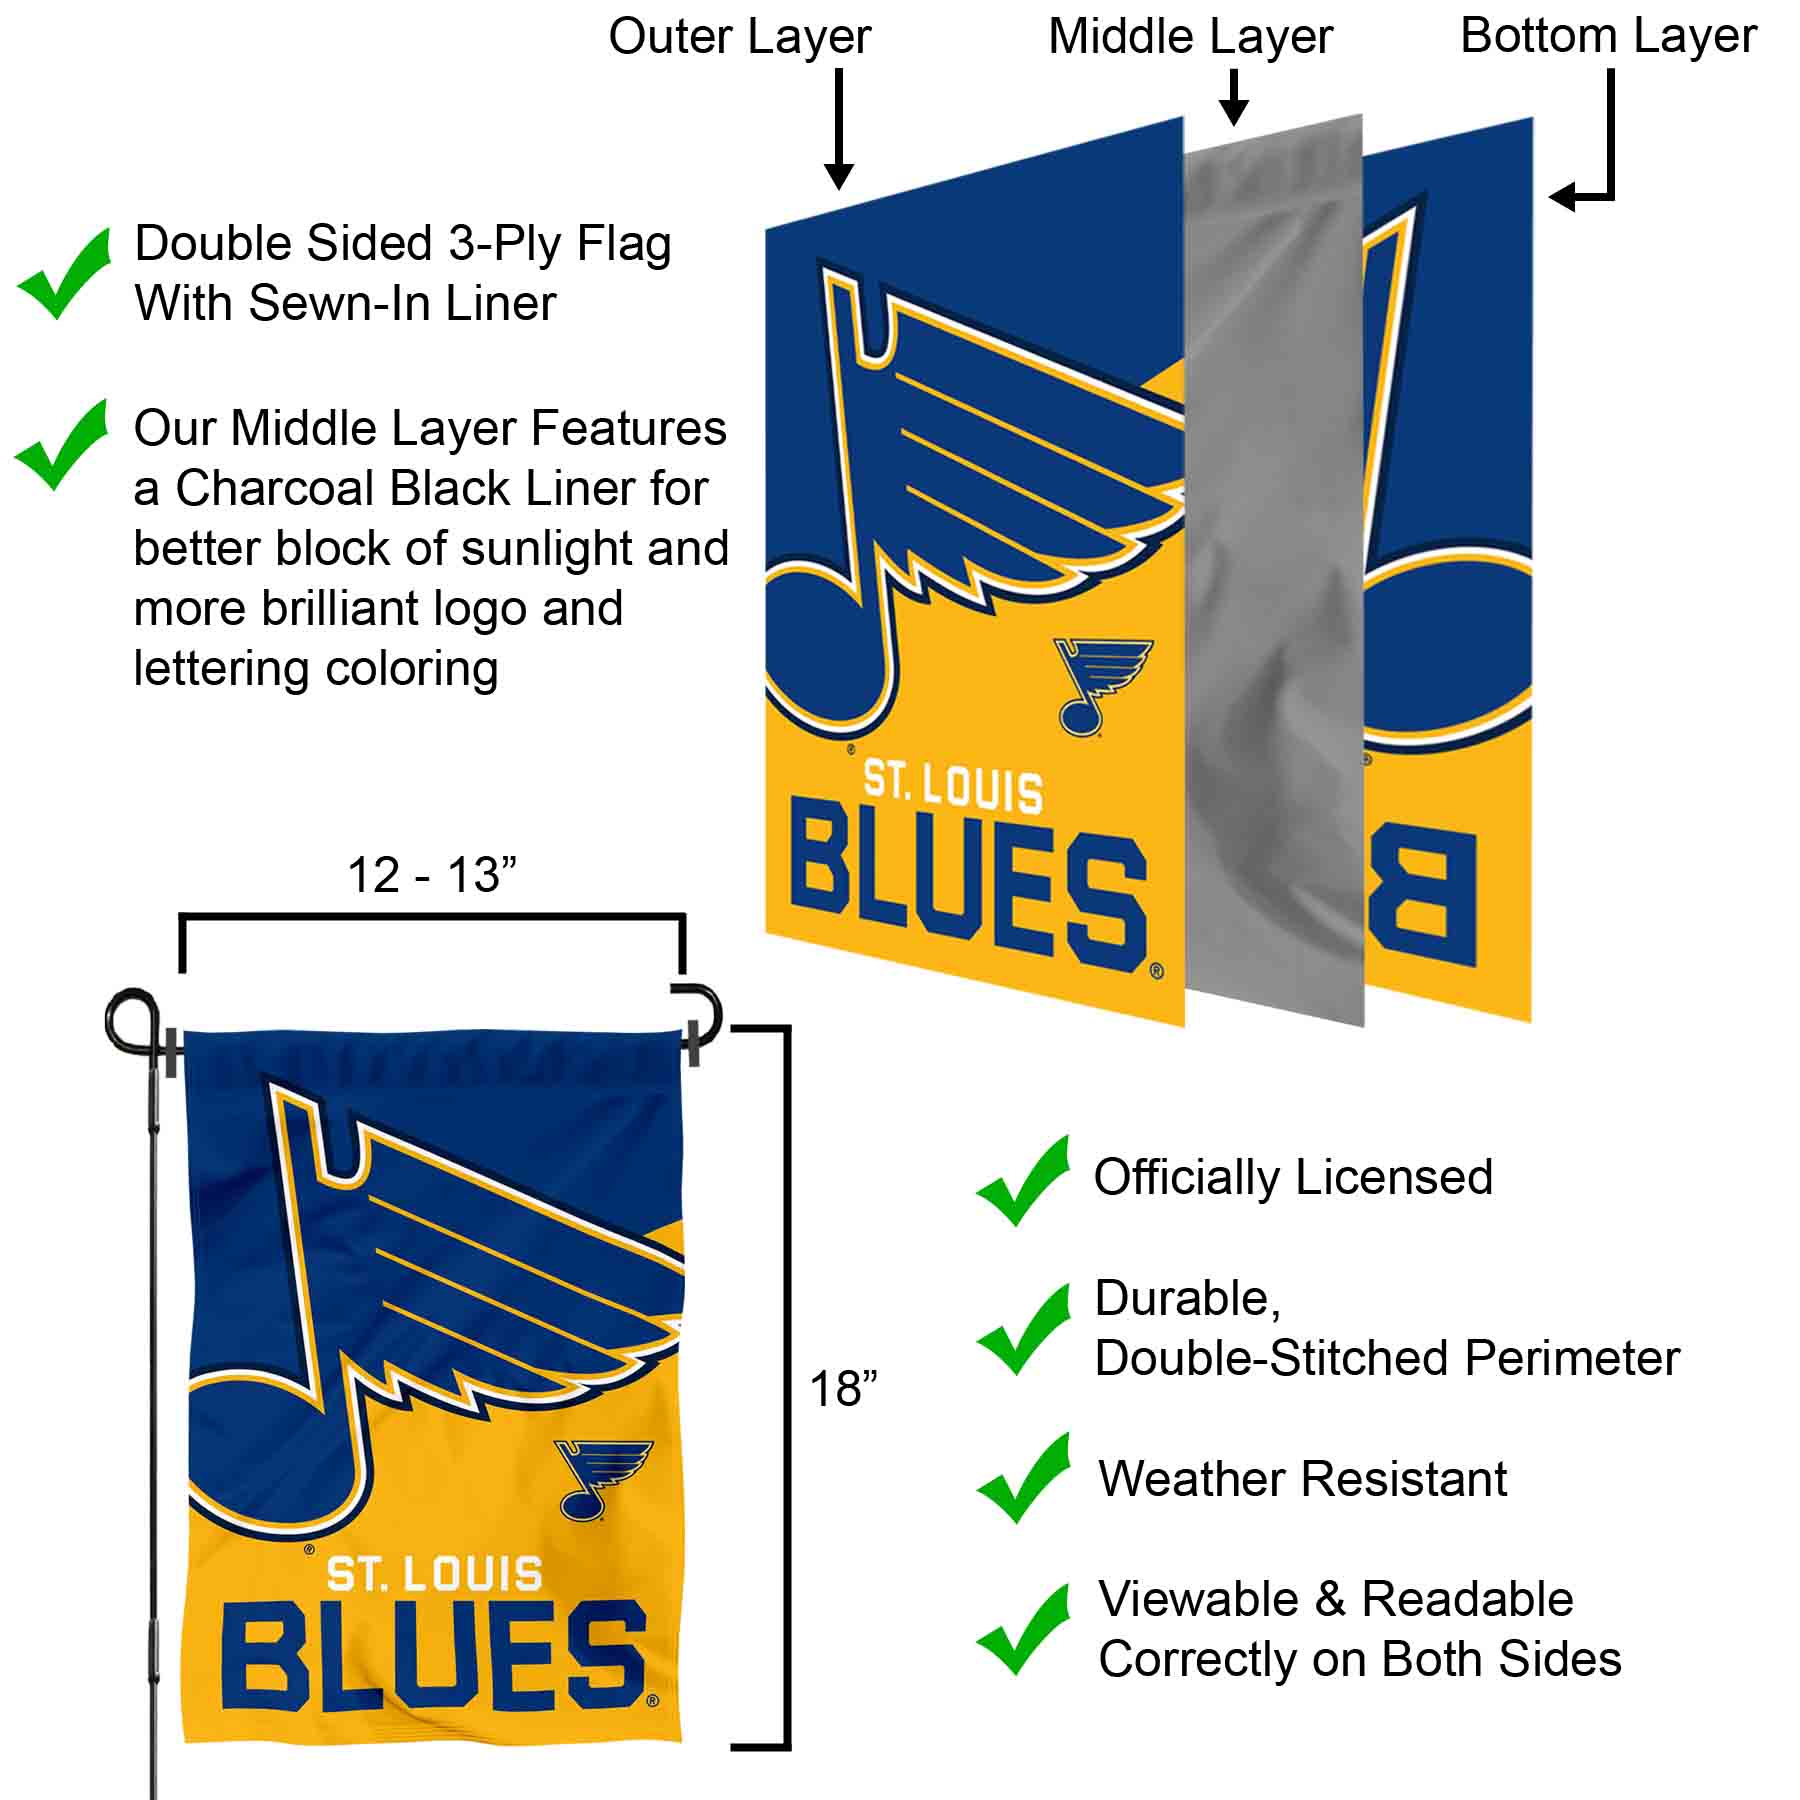 St. Louis Blues Garden Flag Hockey Licensed 12.5 x 18